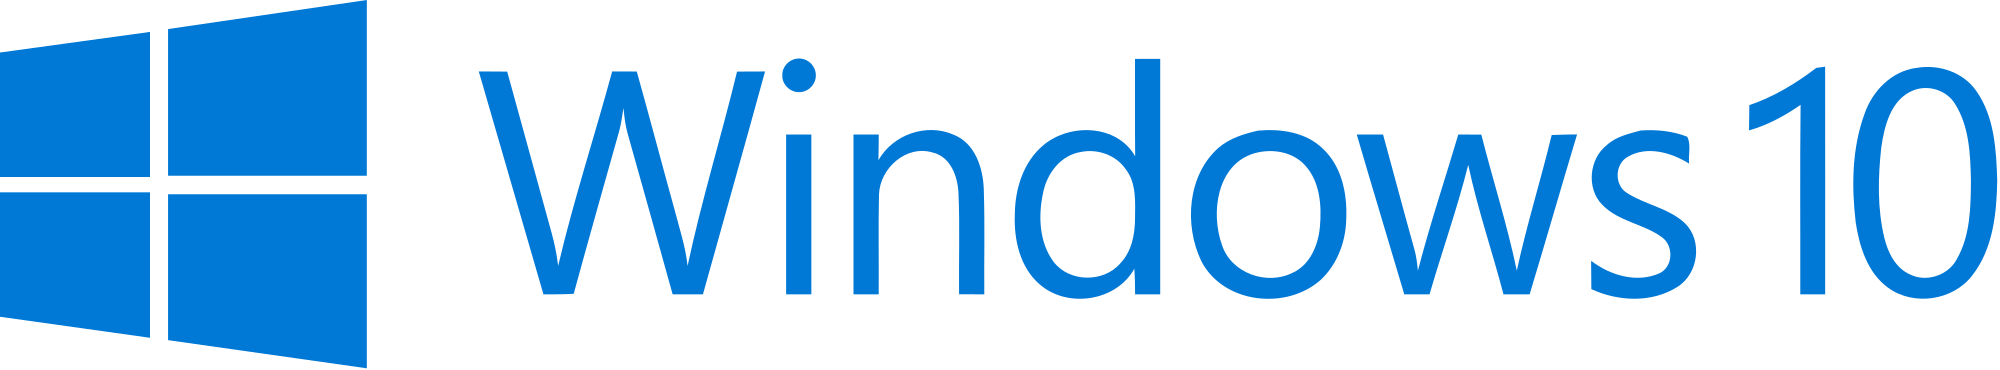 Microsoft Windows Logo PNG